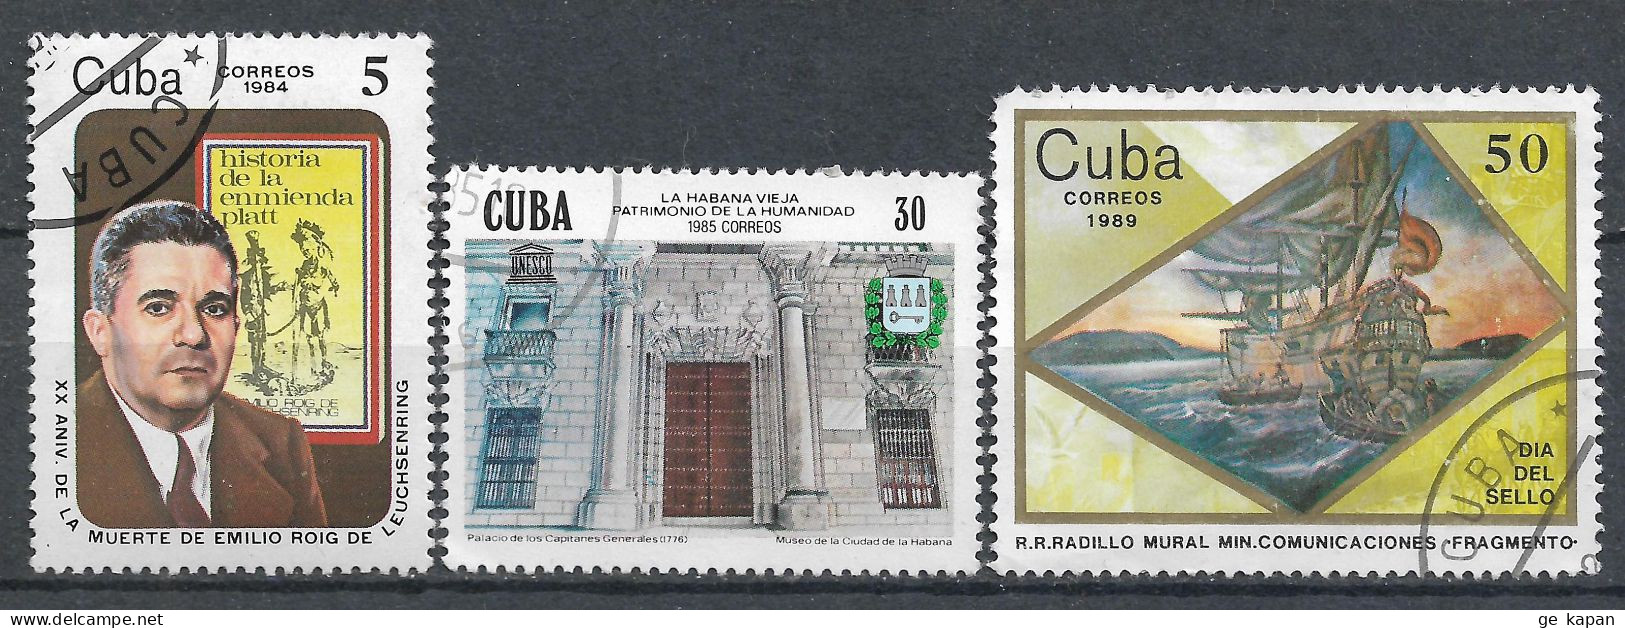 1984-1989 CUBA Set Of 3 Used Stamps (Michel # 2875,2977,3286) CV €3.30 - Usati